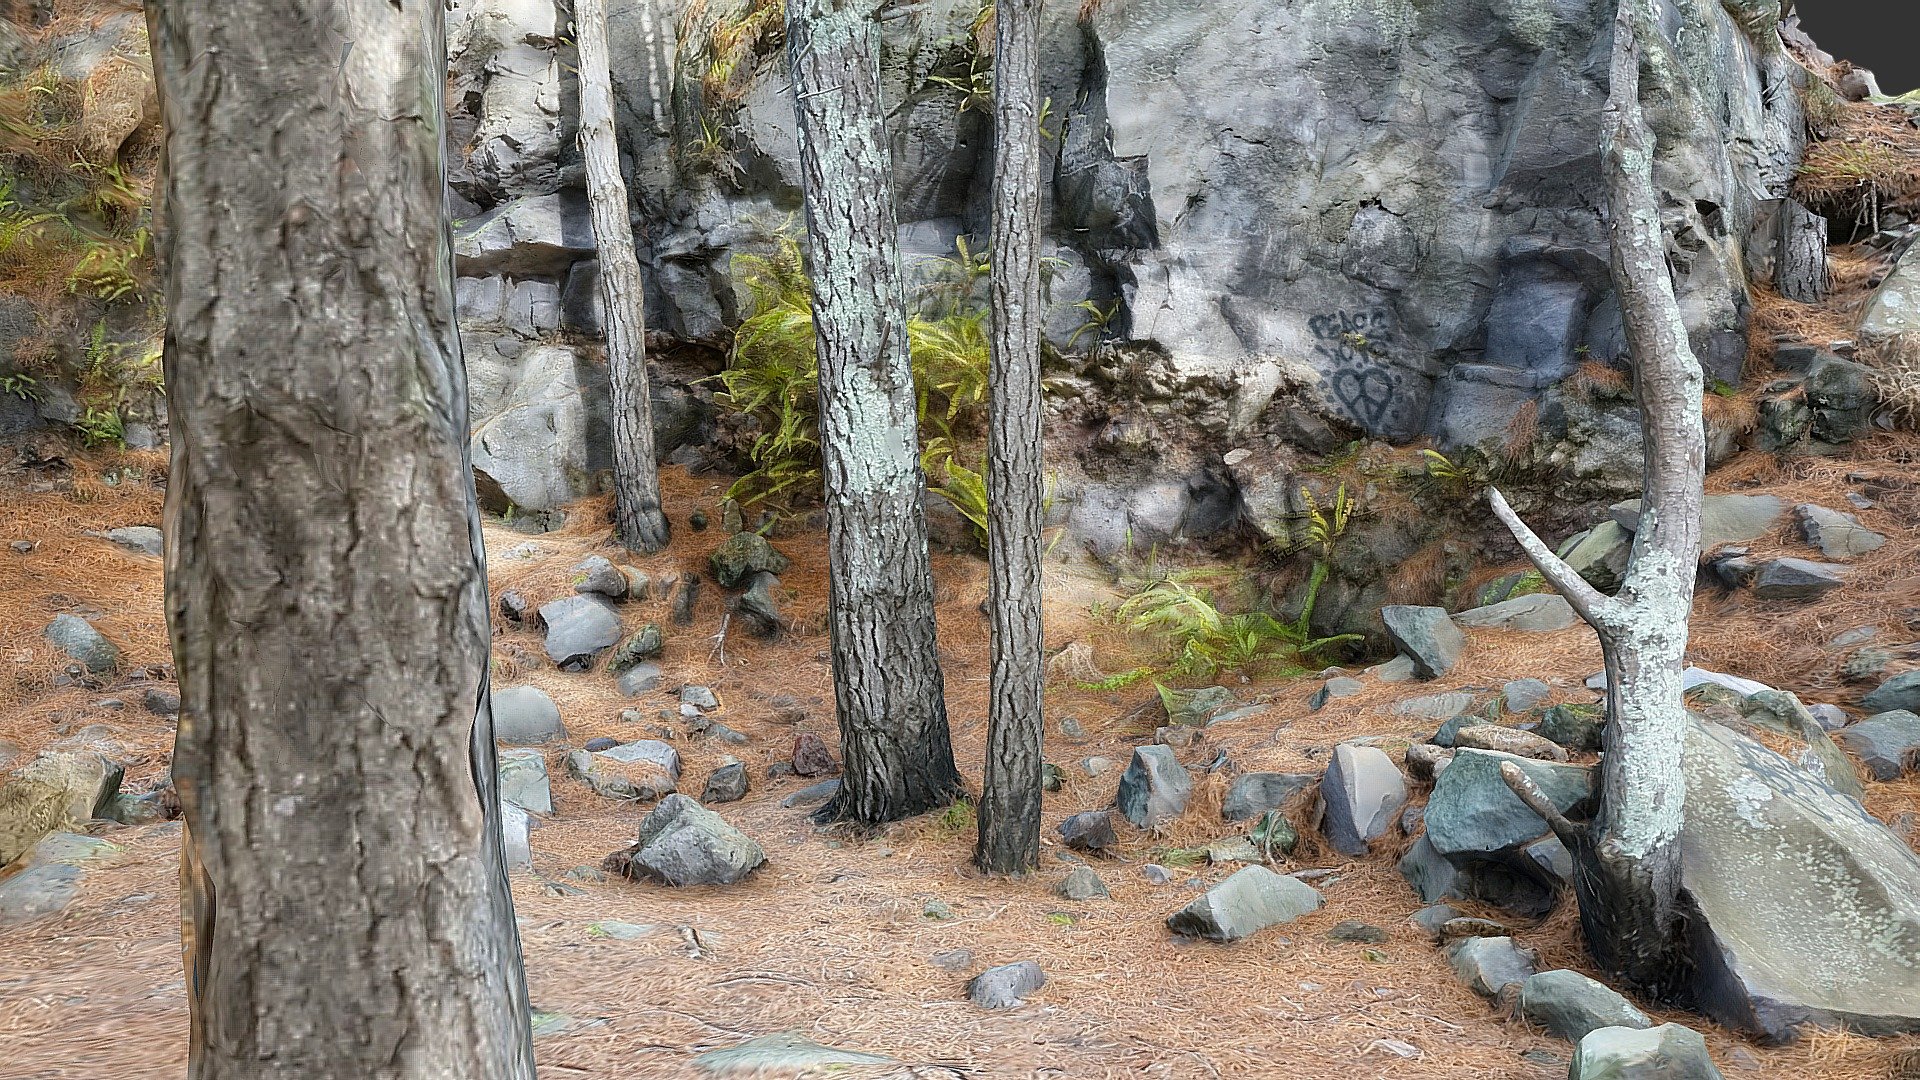 Pine trees and rocks